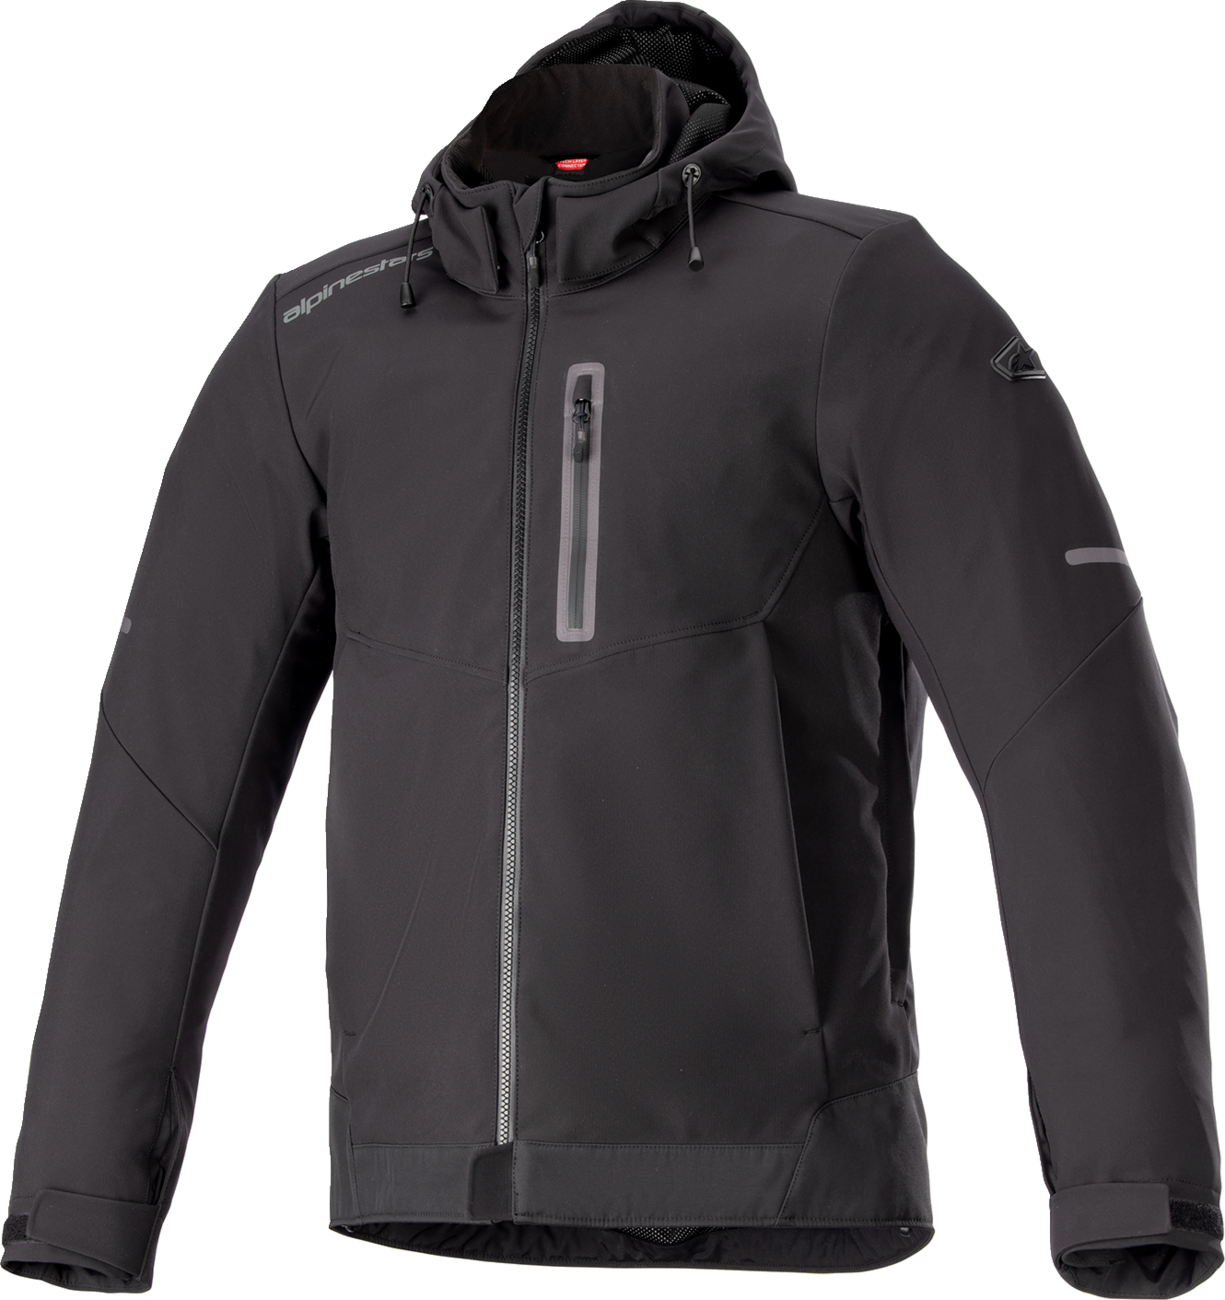 ALPINESTARS Neo Waterproof Jacket - Black - Large 4208023-1100-L